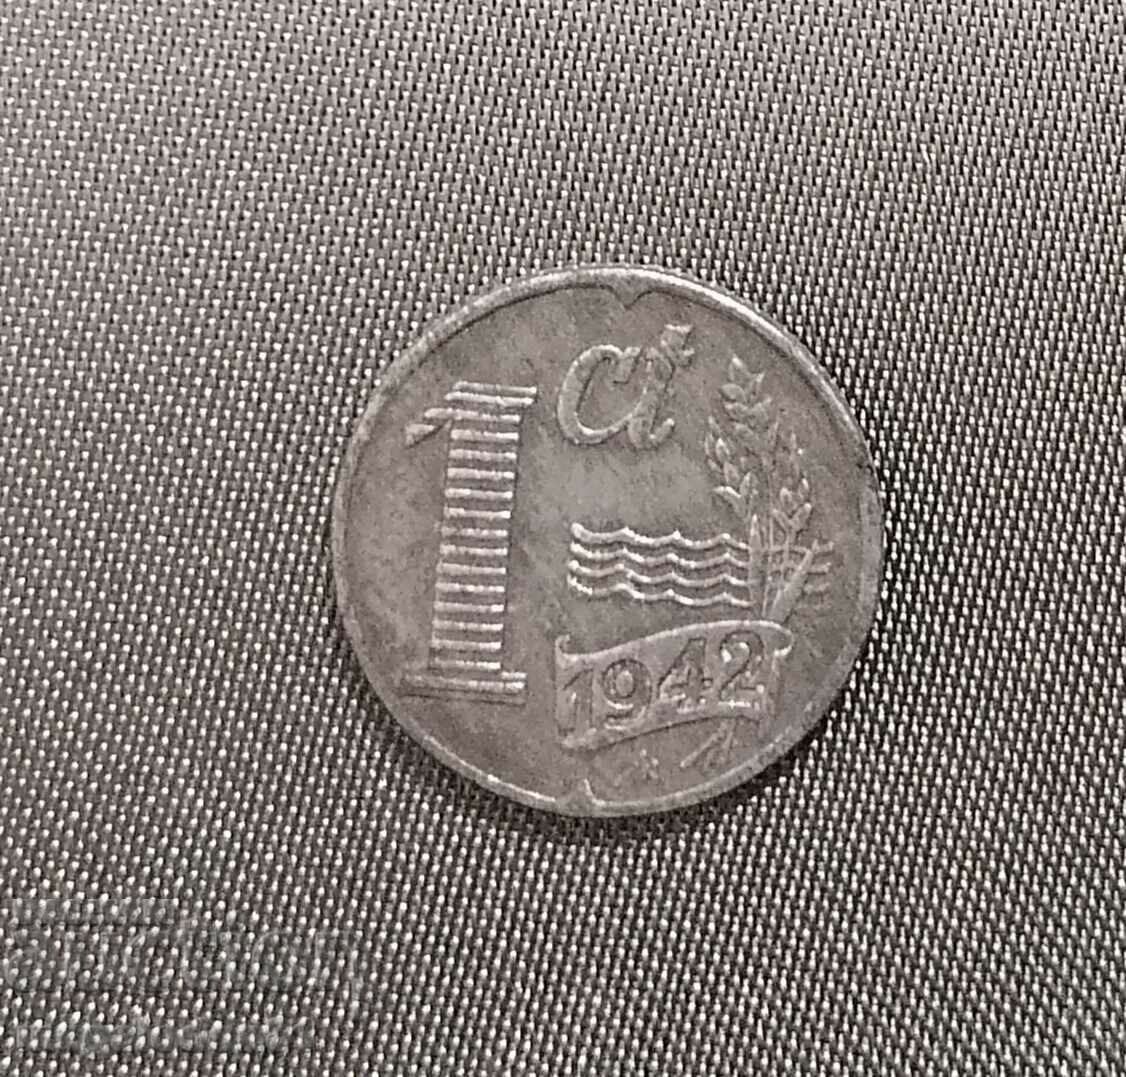 Netherlands - 1 cent, 1942